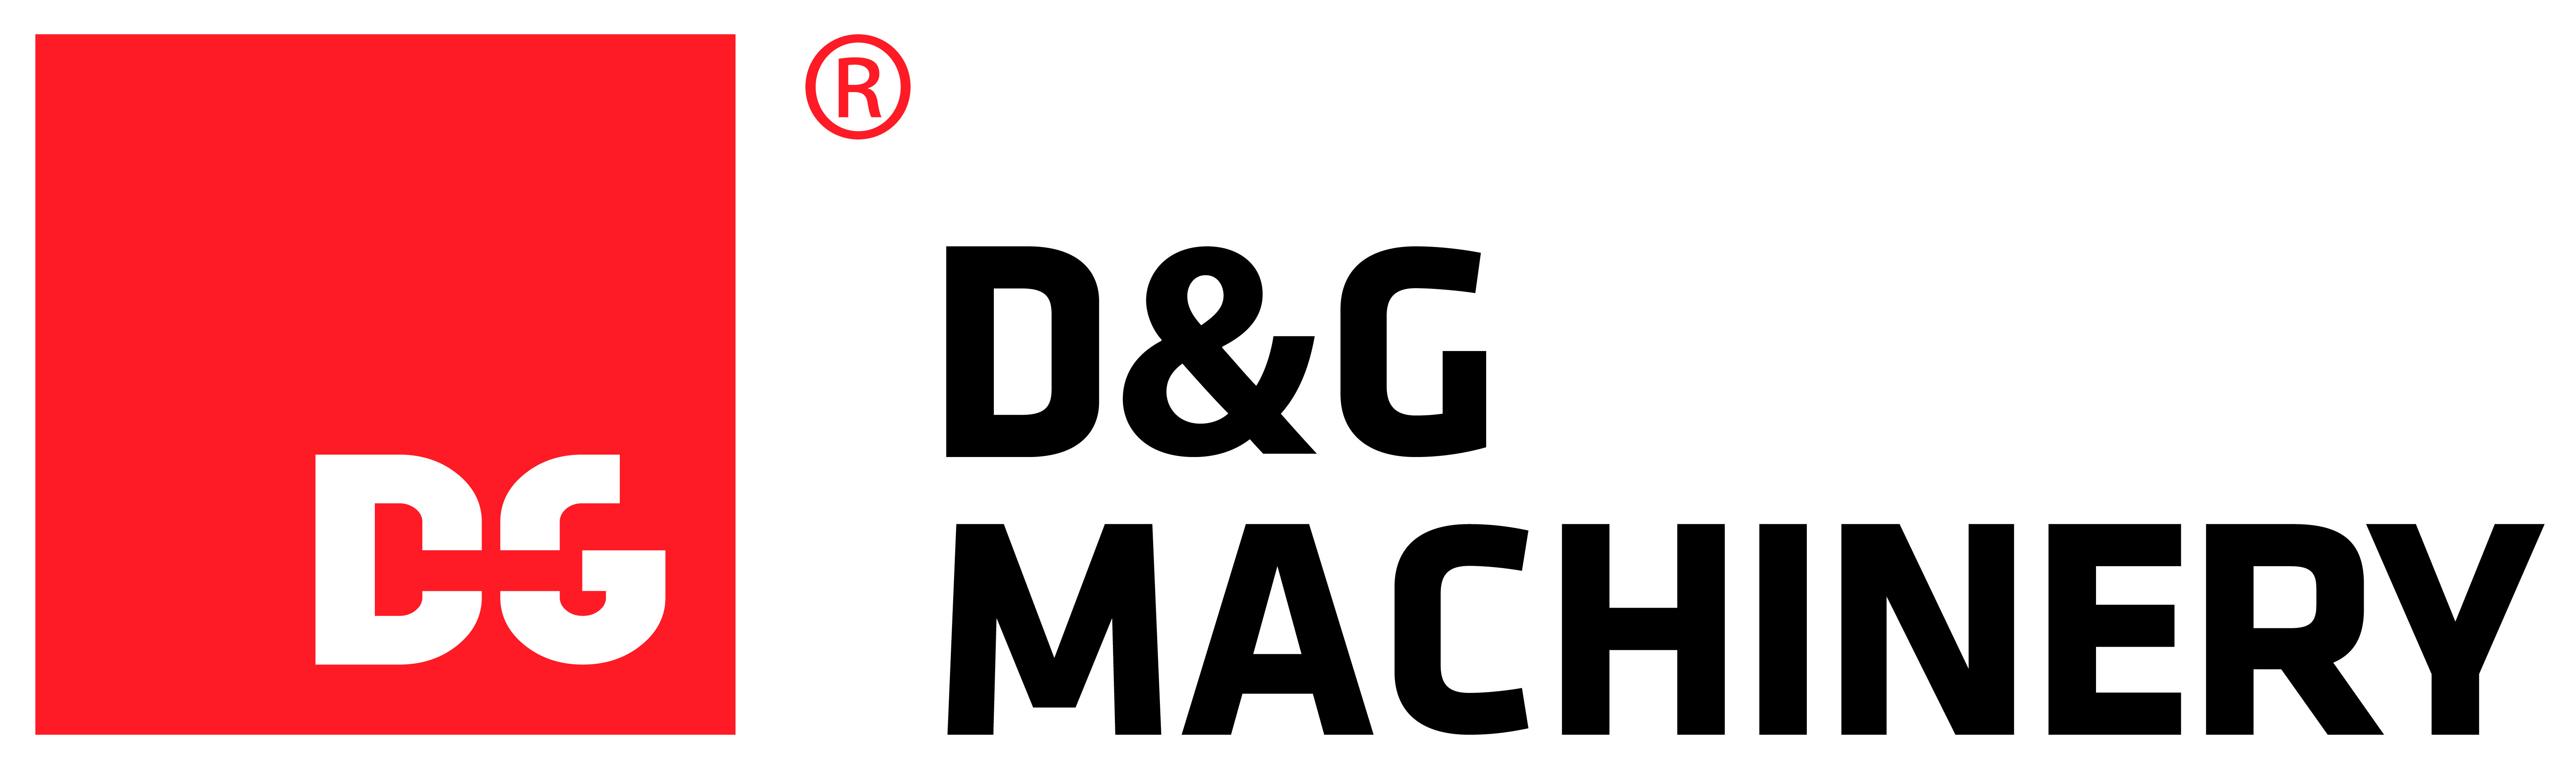 D&G Machinery logo asphalt batch mix plants supplier China